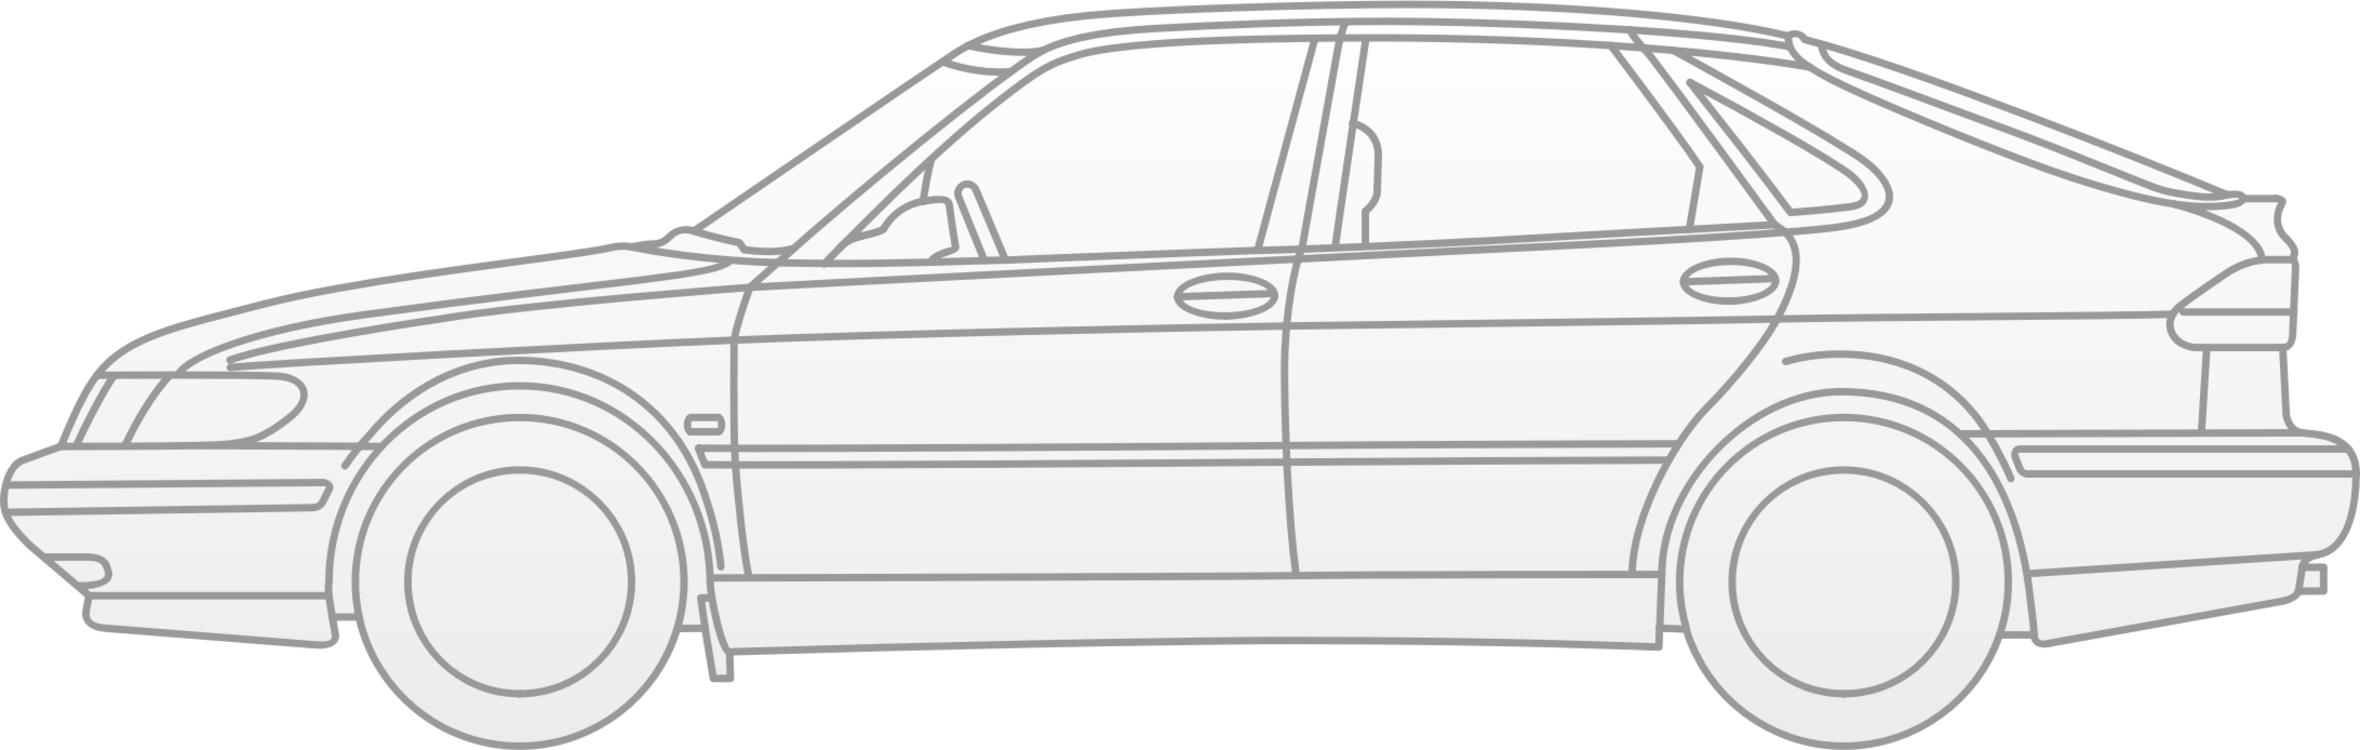 Model Car,Monochrome,Mode Of Transport